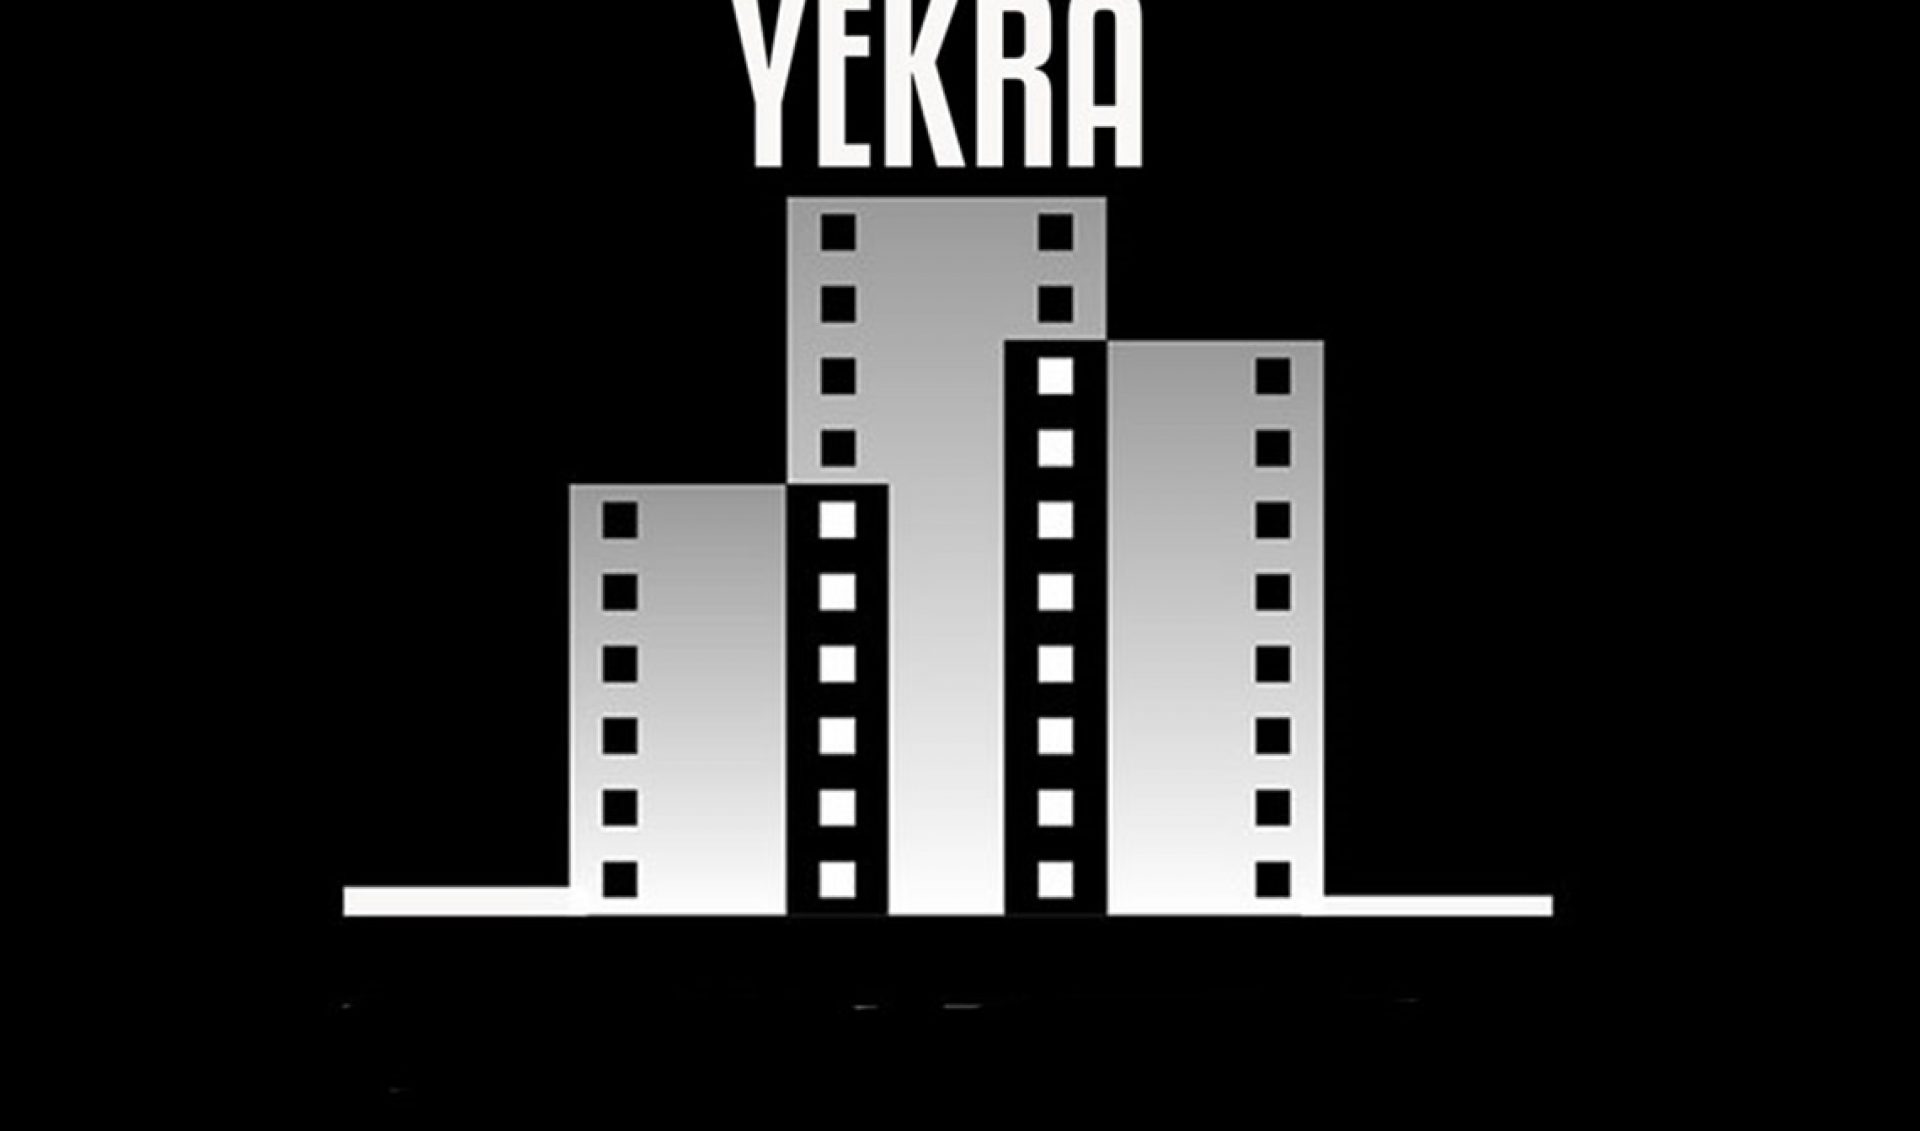 Video On Demand Platform Yekra Shuts Down